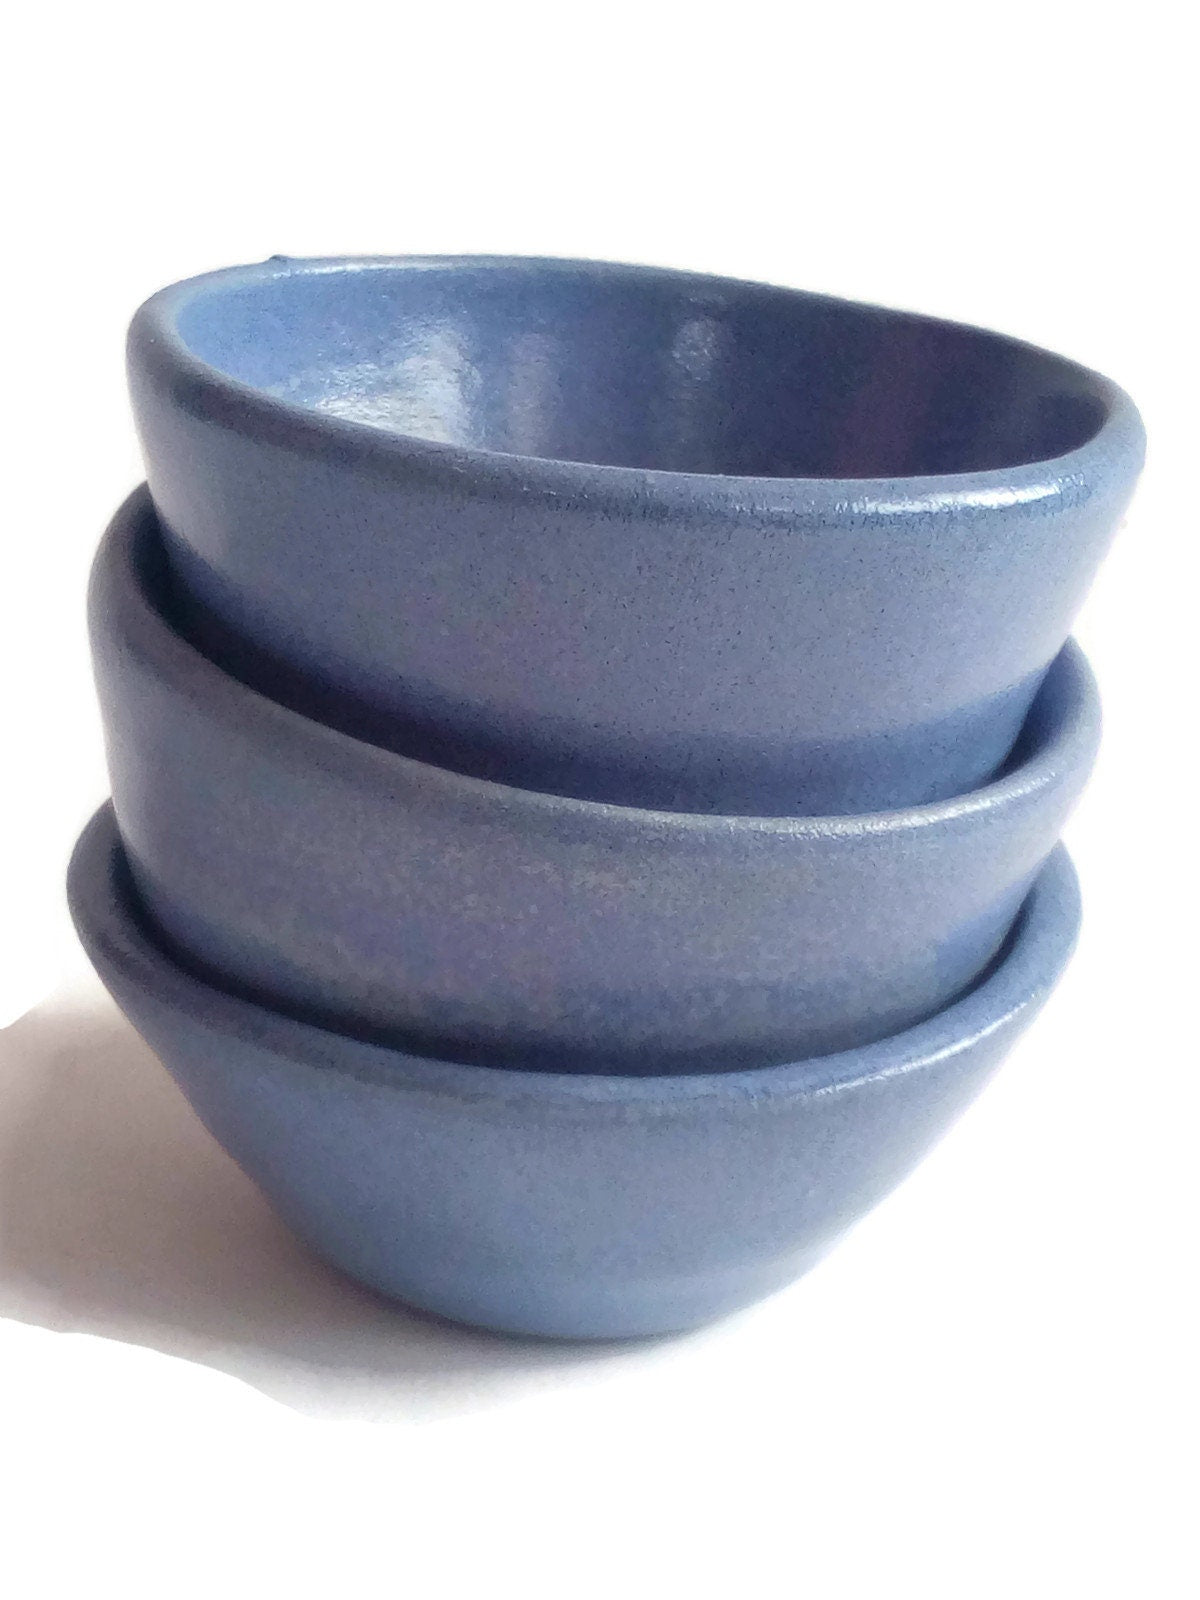 3Pc Blue Handmade Ceramic Bowl Set, Soy Sauce Bowl, Unique Small Sauce Bowls To Serve Small Things, Decorative Bowl Gift For Mom - Ceramica Ana Rafael